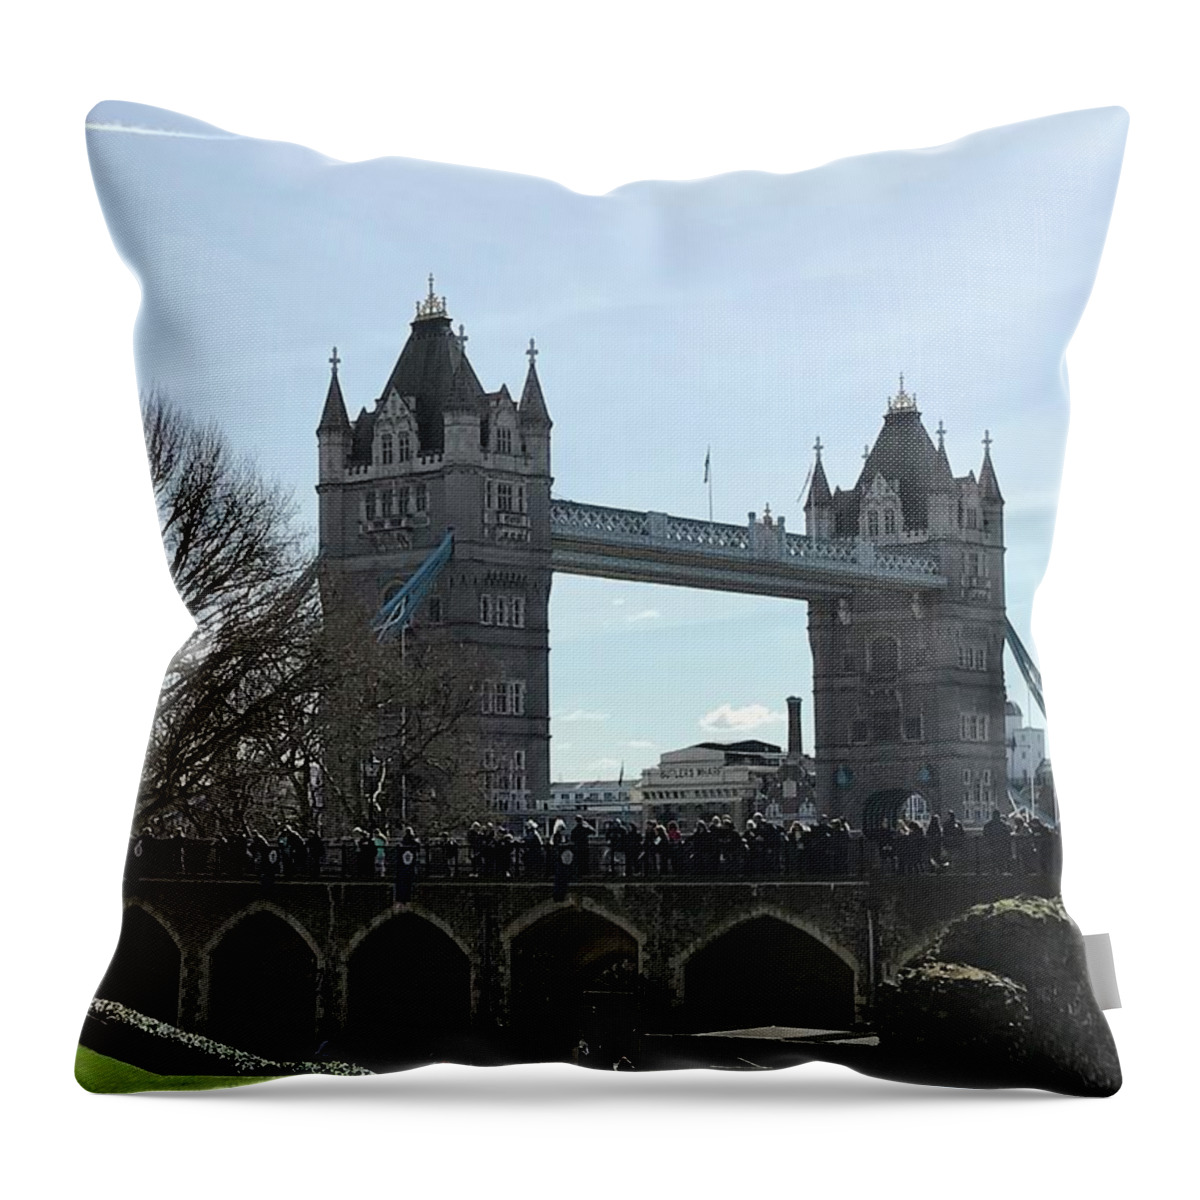 Bridge Throw Pillow featuring the photograph London Landmark by Lee Darnell